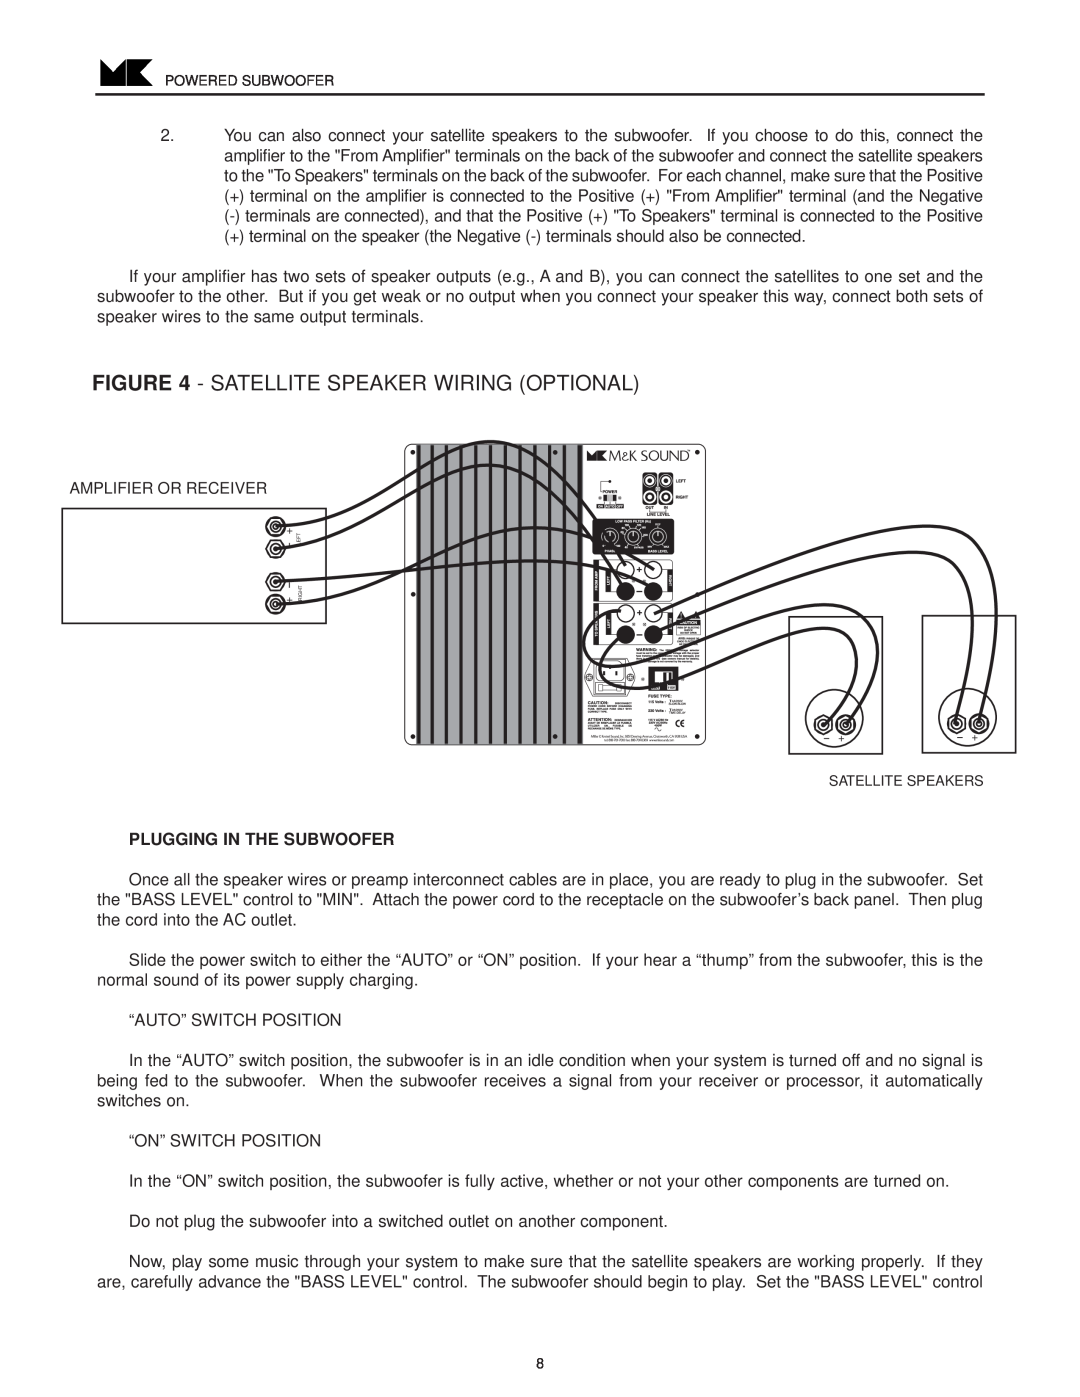 MK Sound VX-850, VX-860 operation manual Satellite Speaker Wiring Optional, Plugging In The Subwoofer 